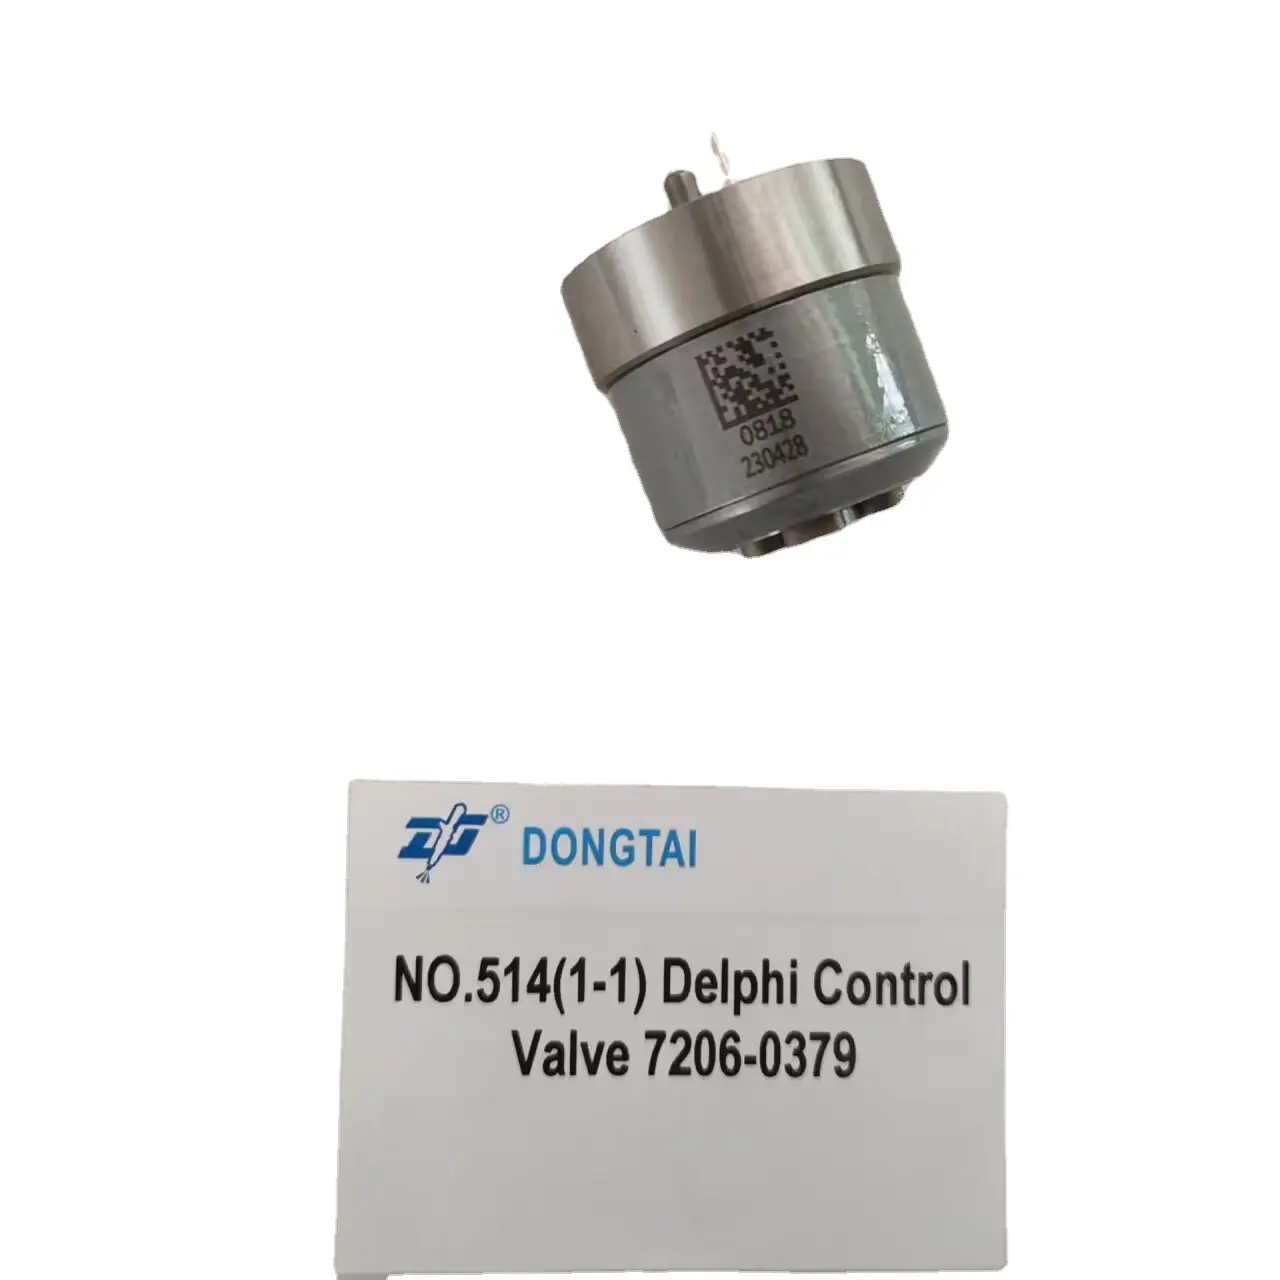 NO.514(1-1) Original Diesel Fuel Engine E1 two 2 Pins Control valve Actuator 7206-0379 for Delphi Injector